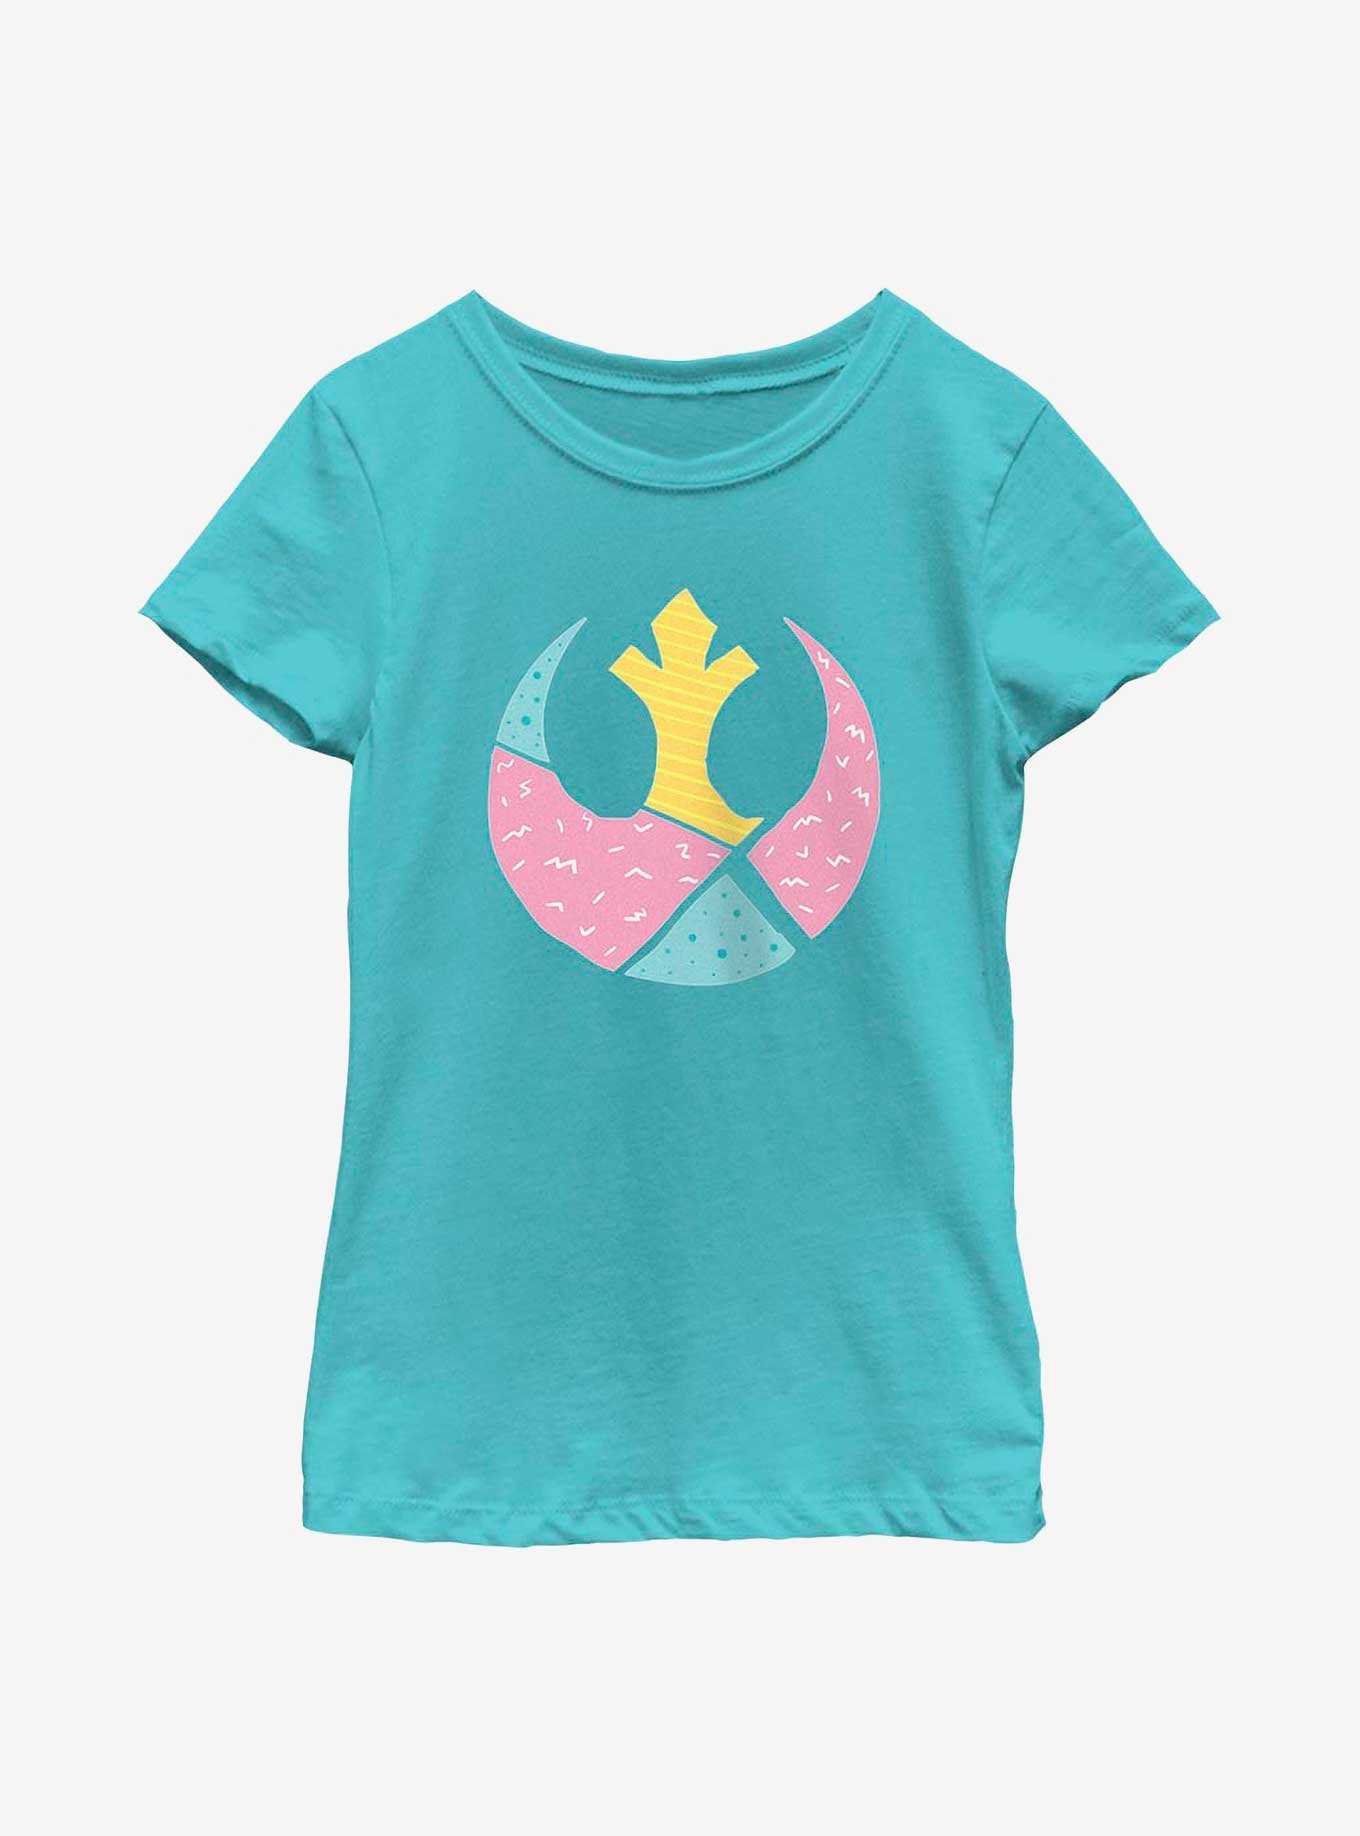 Star Wars Geometric Shaped Rebel Symbol Youth Girls T-Shirt, , hi-res